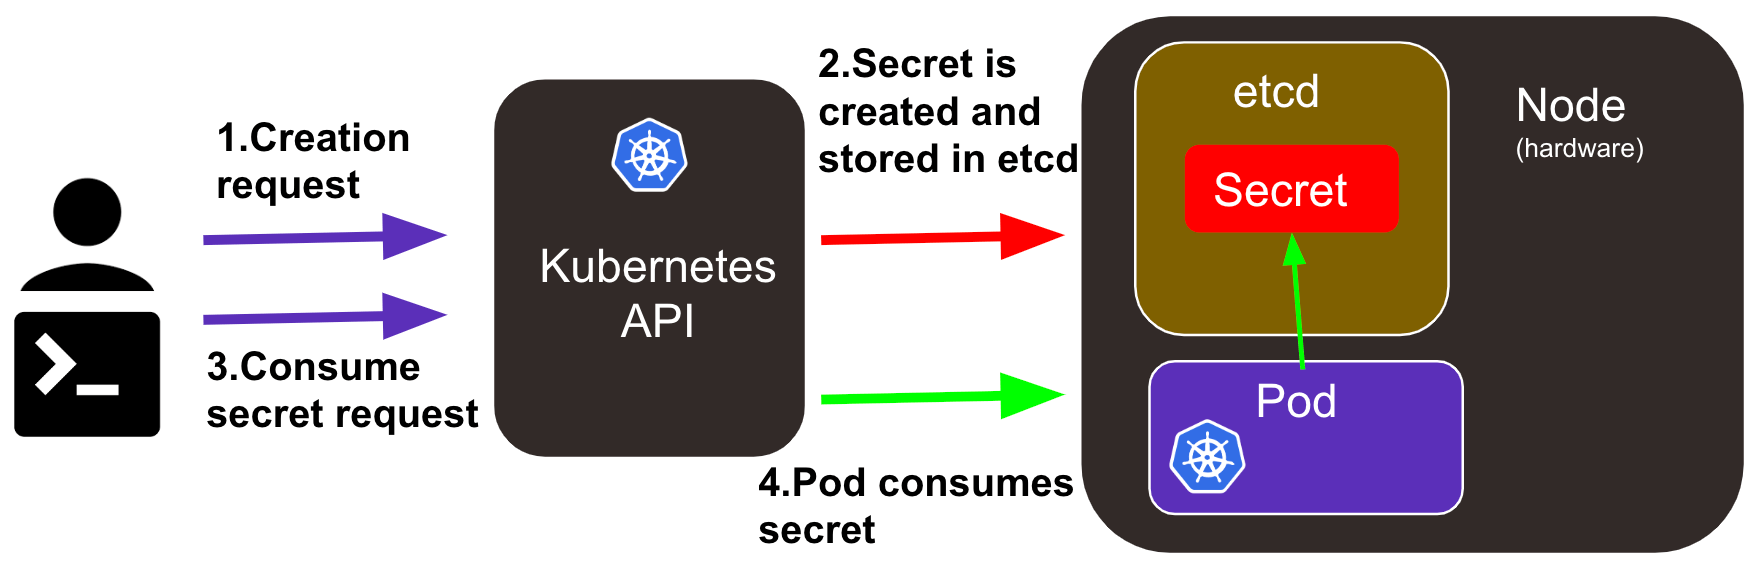 Kubernetes secrets: how to create & set up k8s secrets